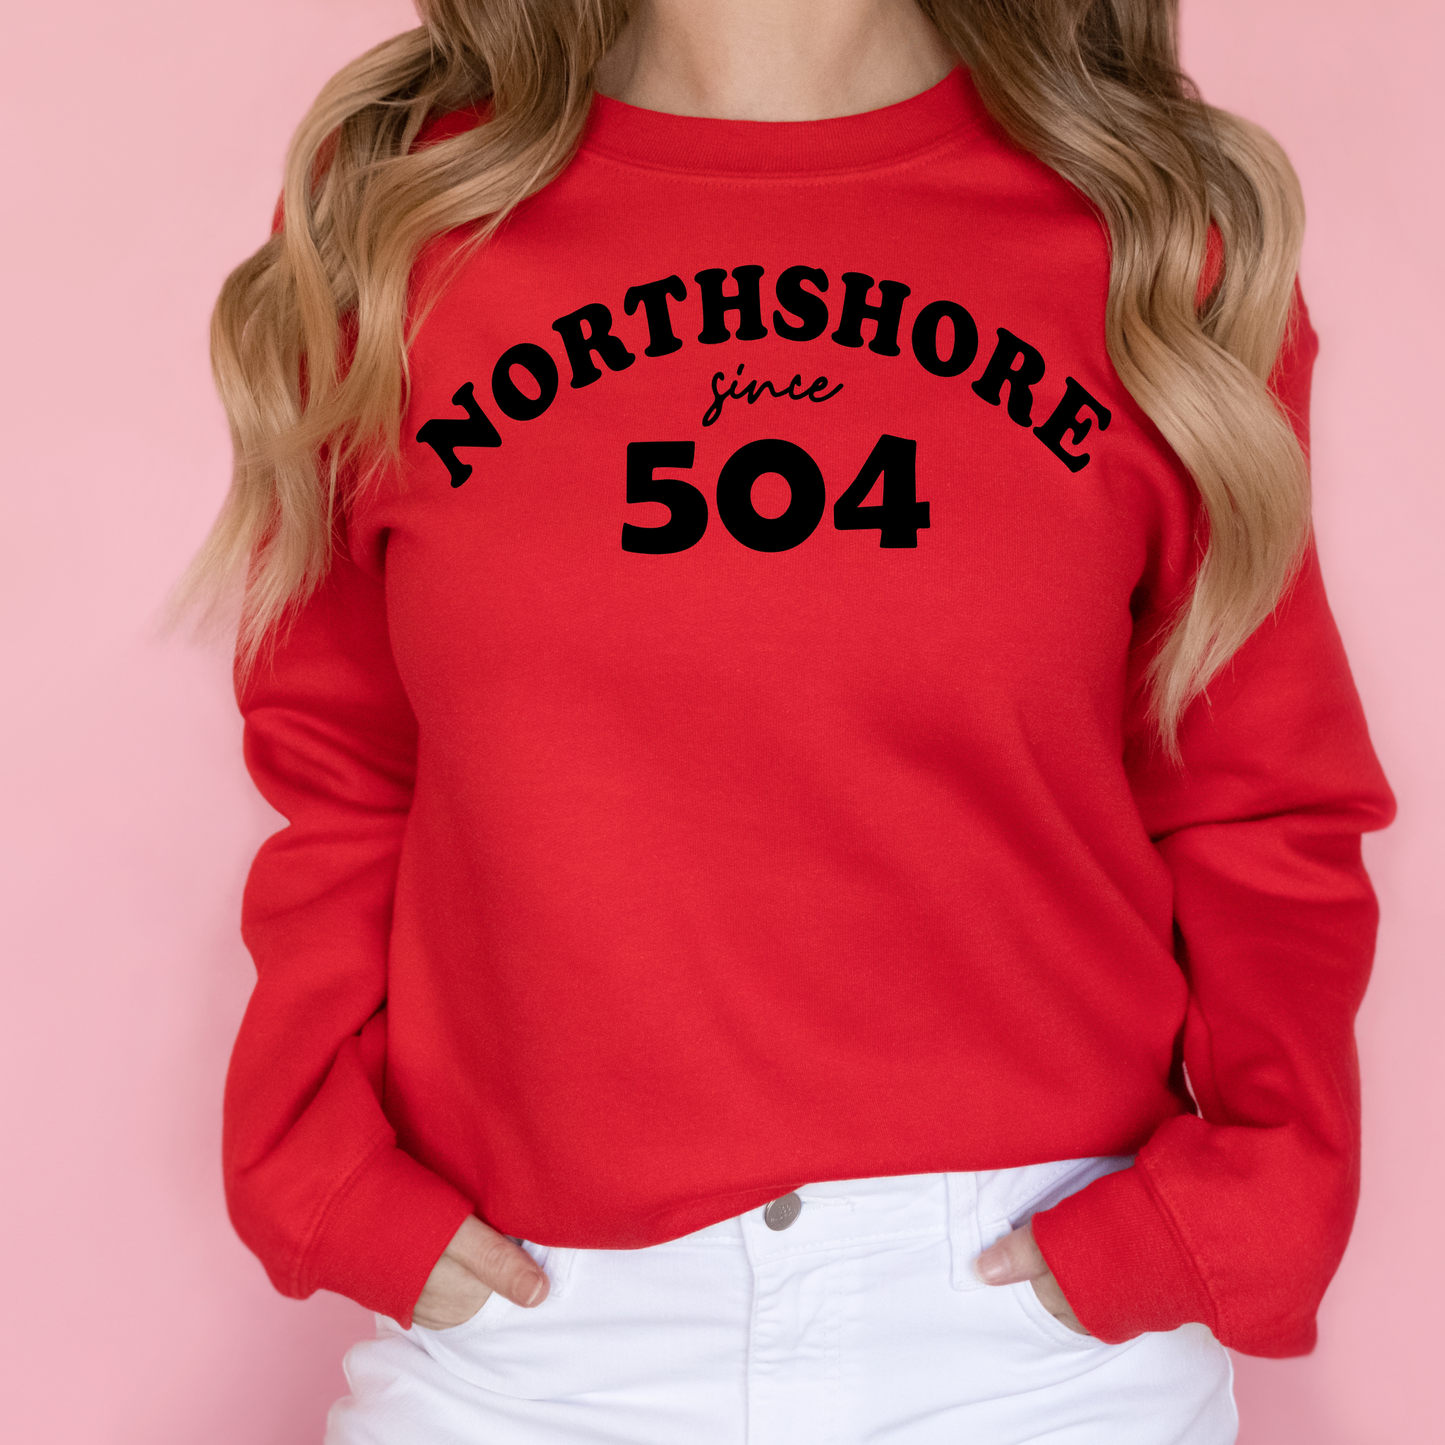 Northshore SINCE 504 - Sweatshirt